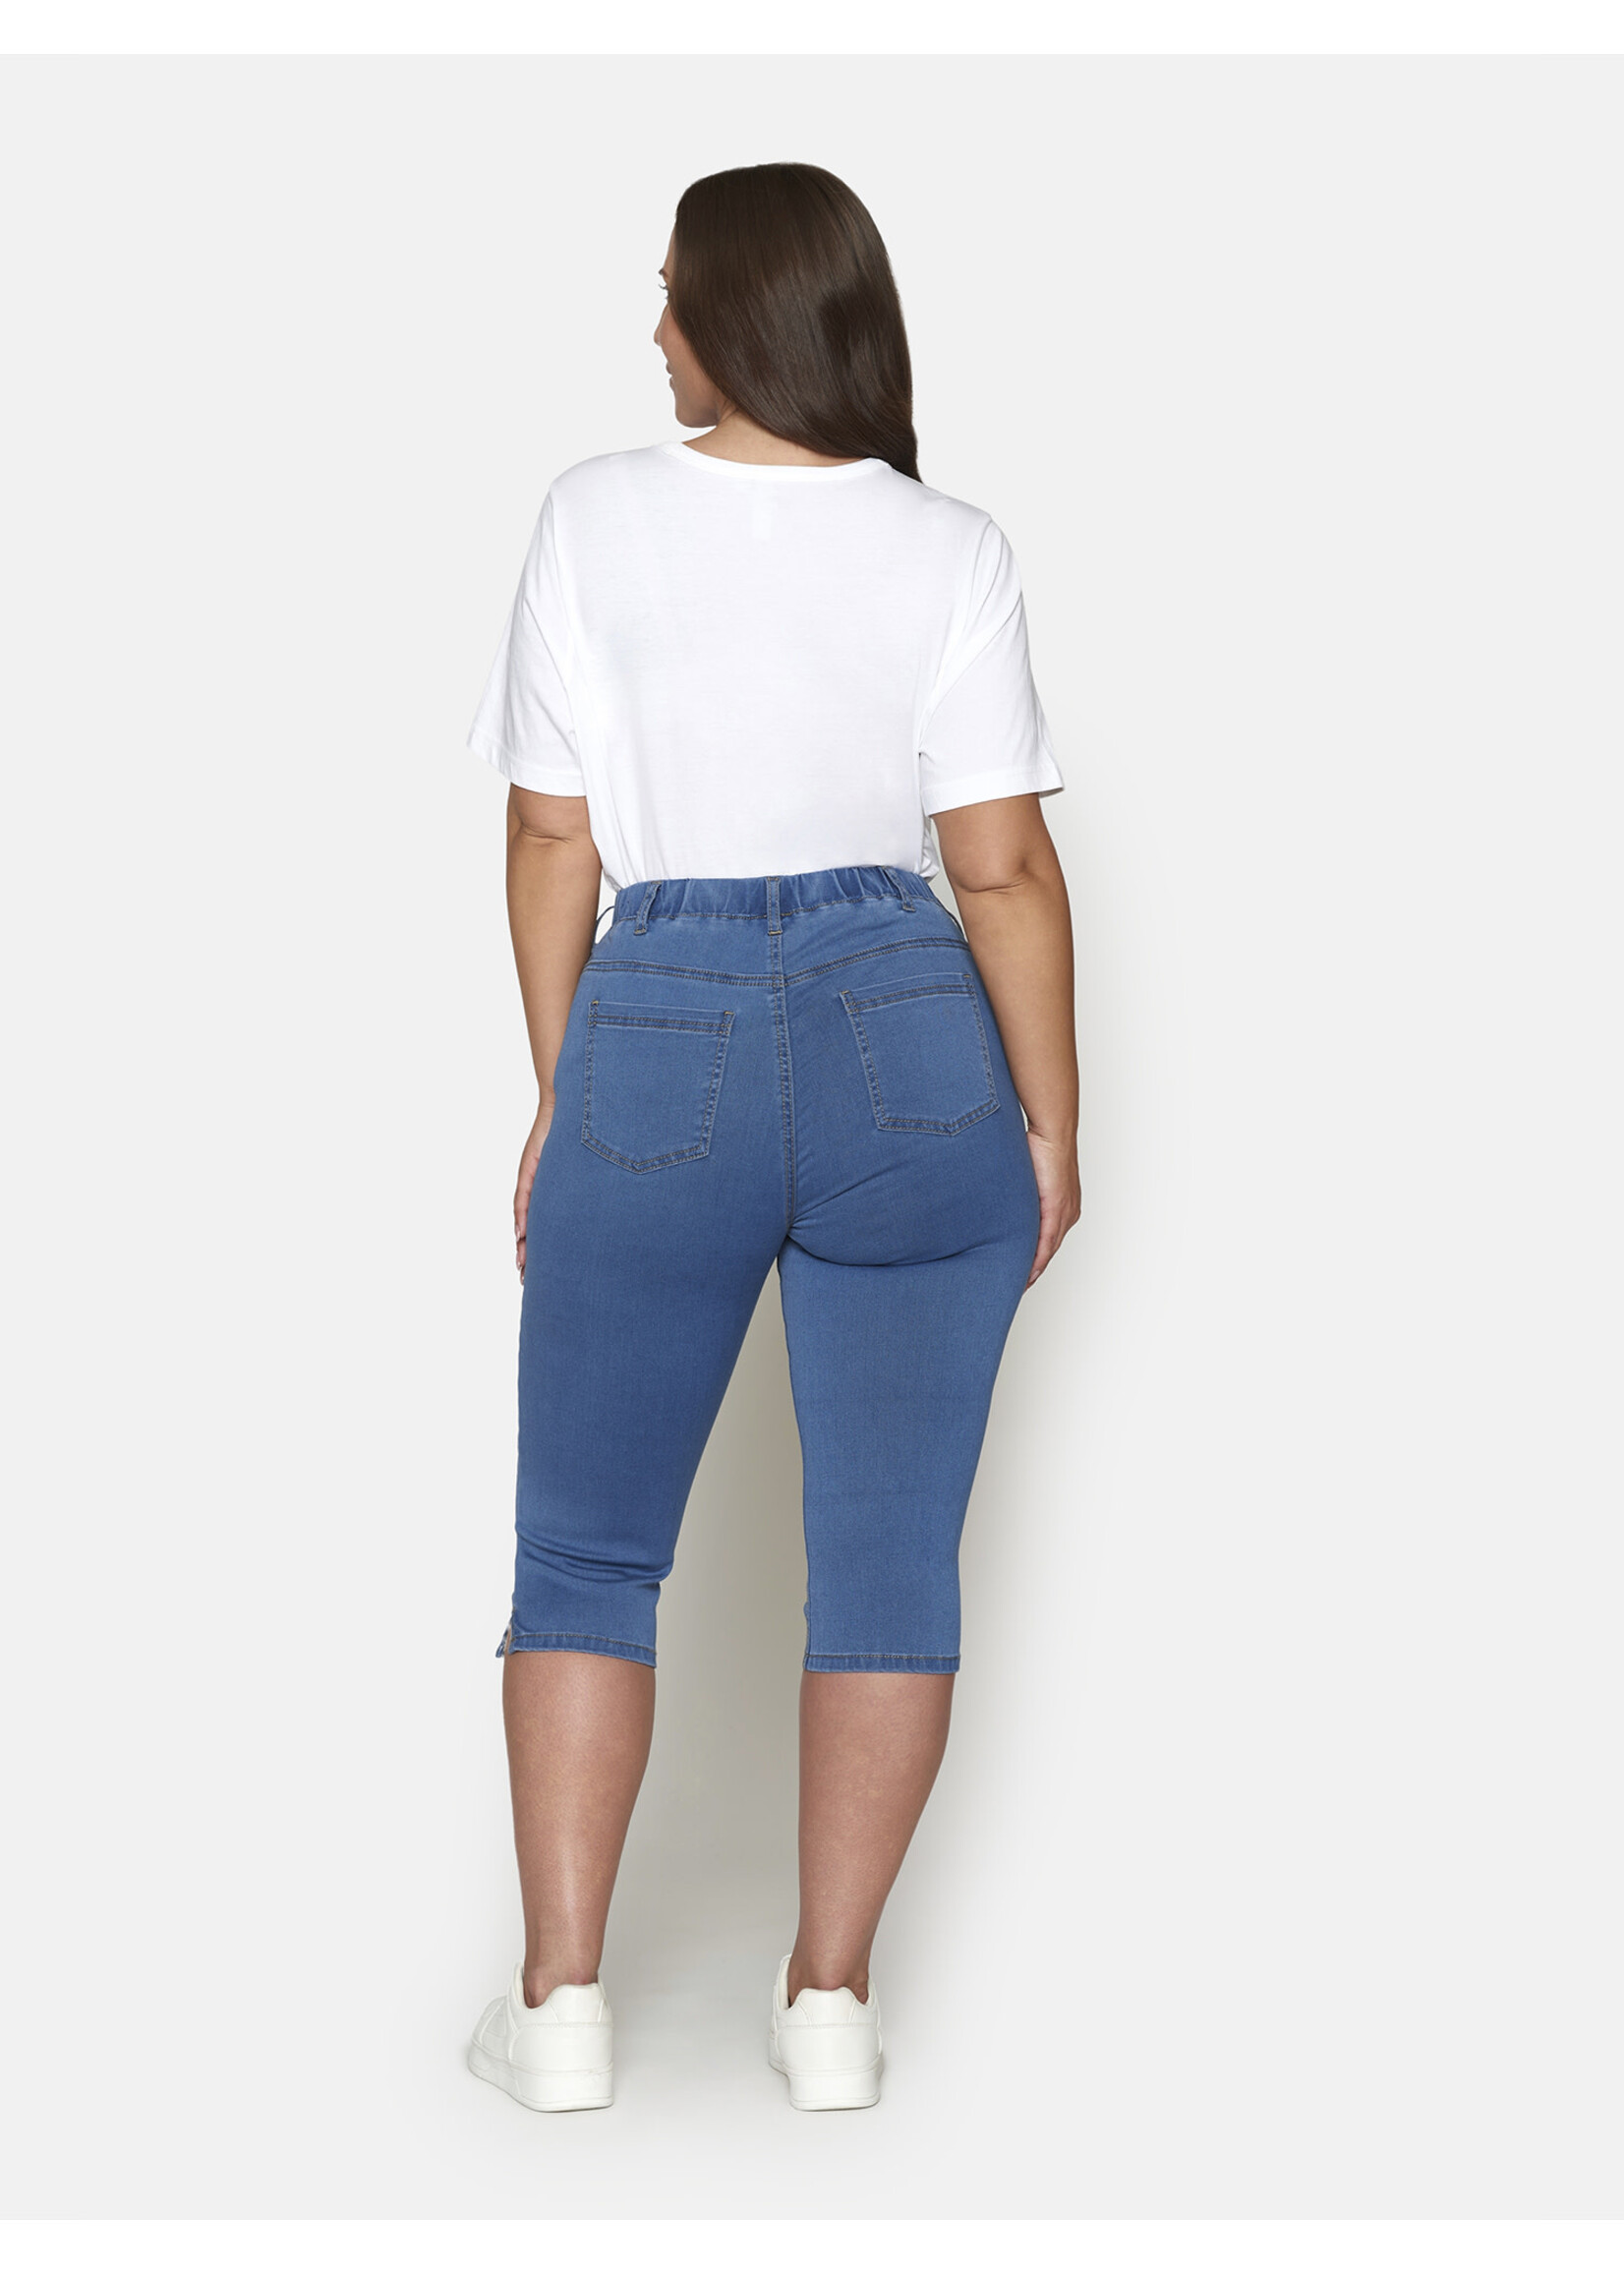 Ciso Sofia jeans capri